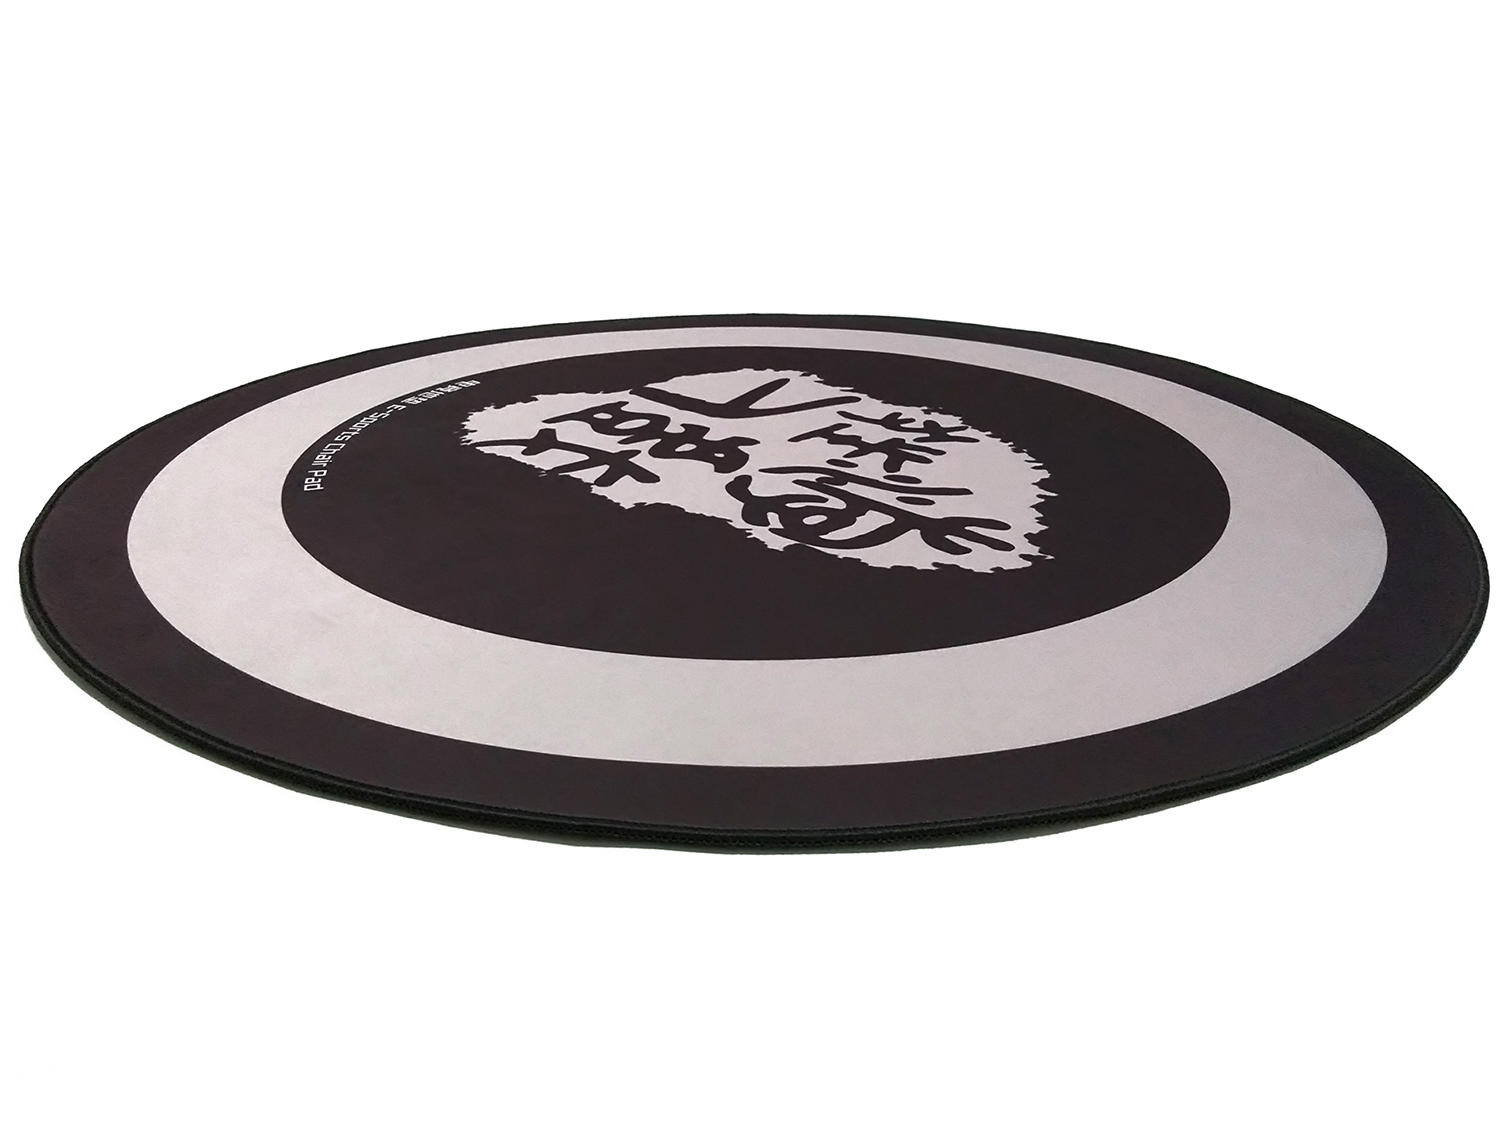 Custom design extend non-slip waterpoof easier clean E-sport gaming chair mat